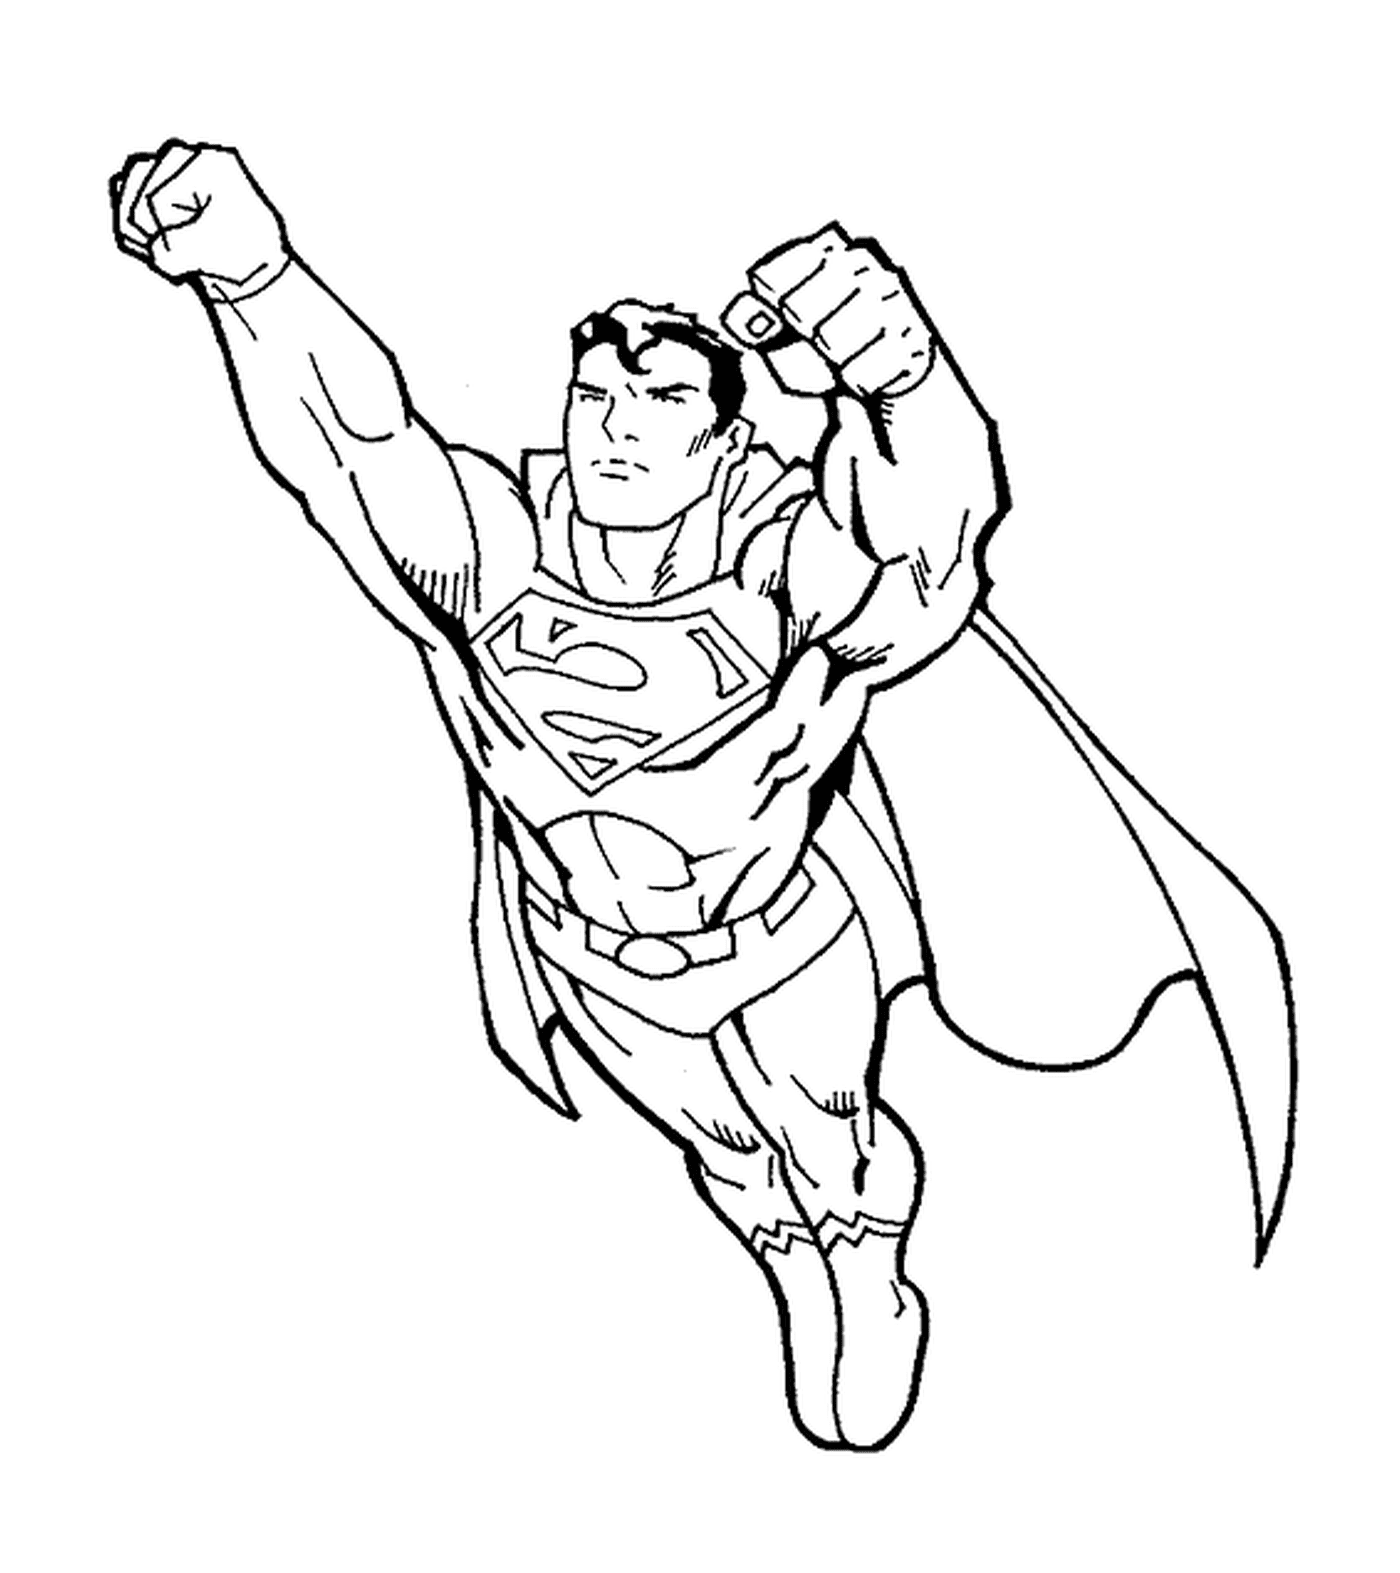  Superman, pugni in avanti 